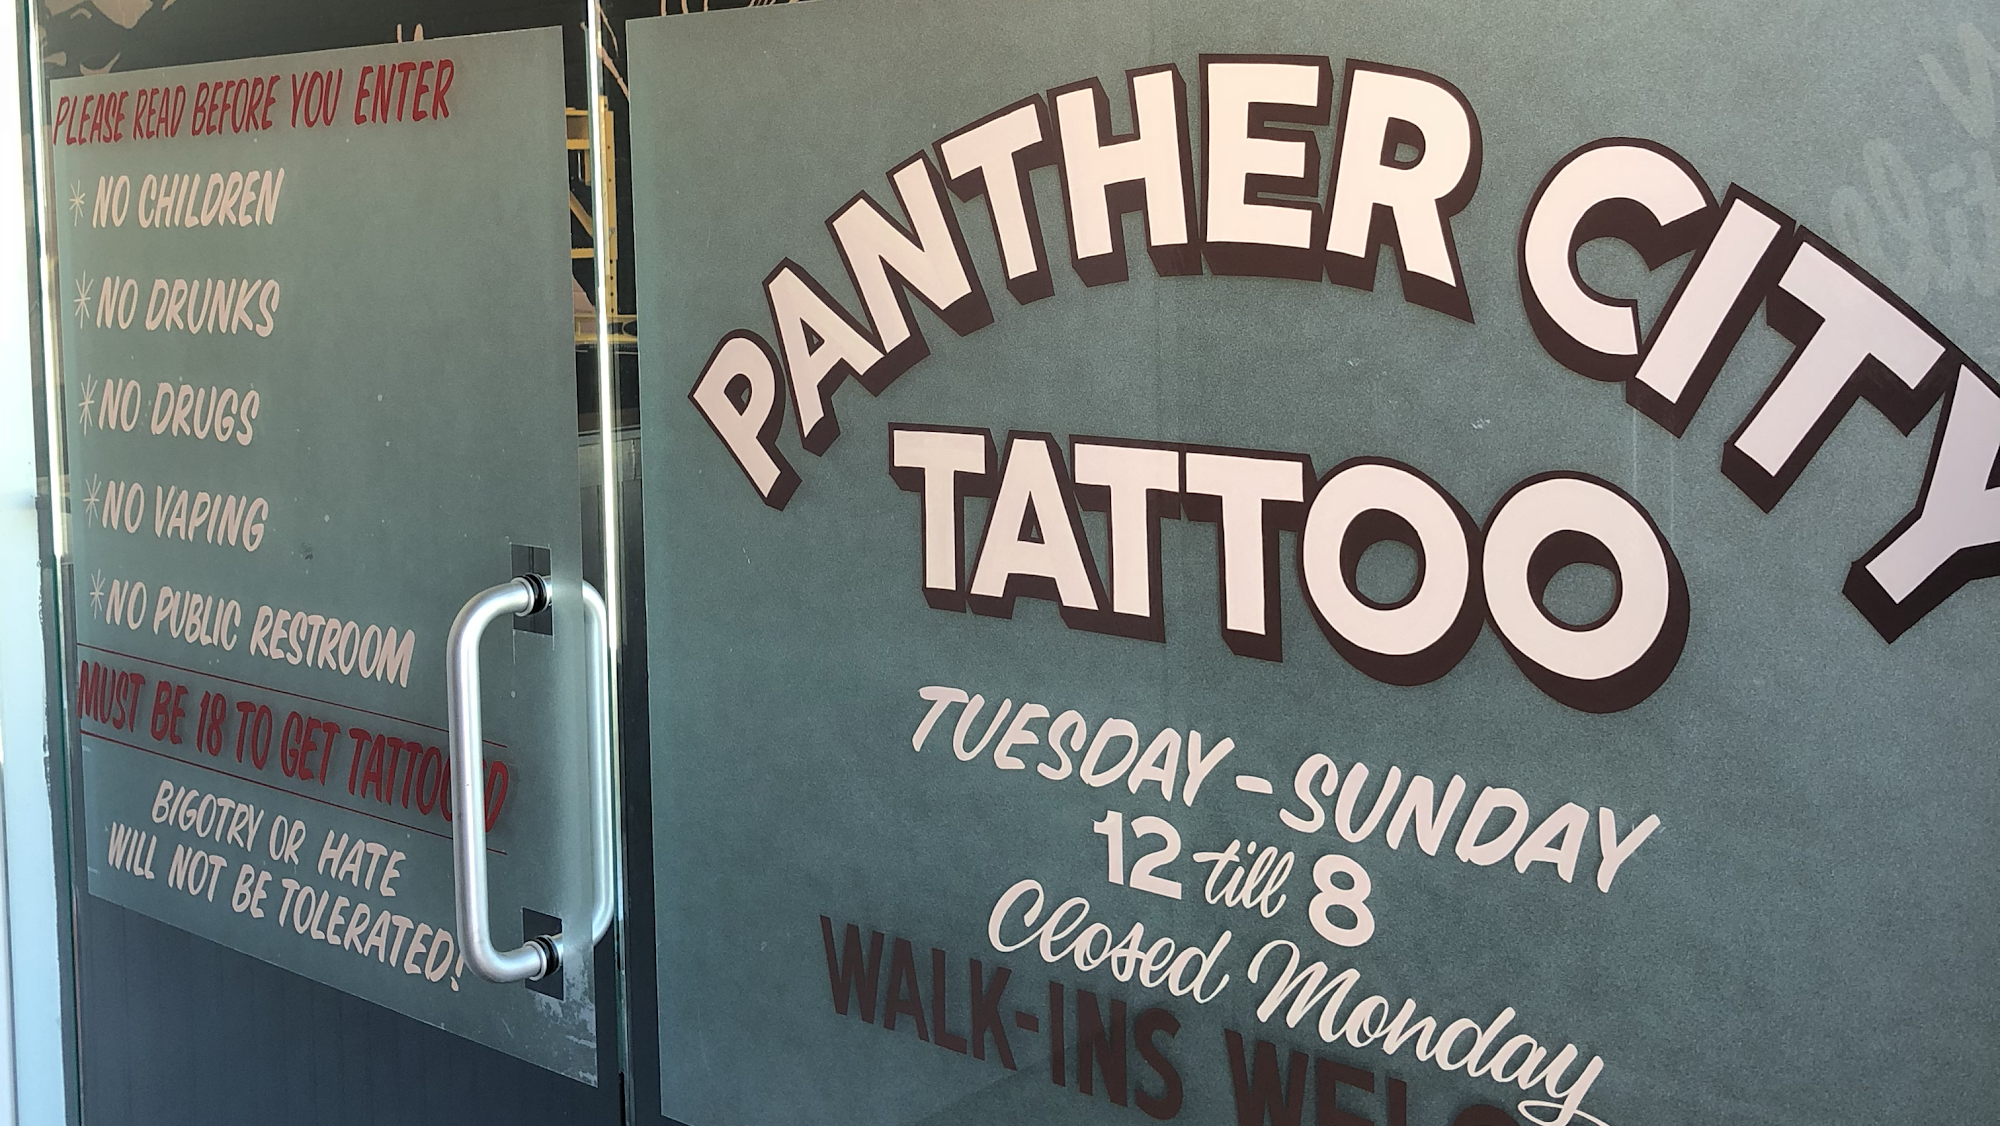 Panther City Tattoo